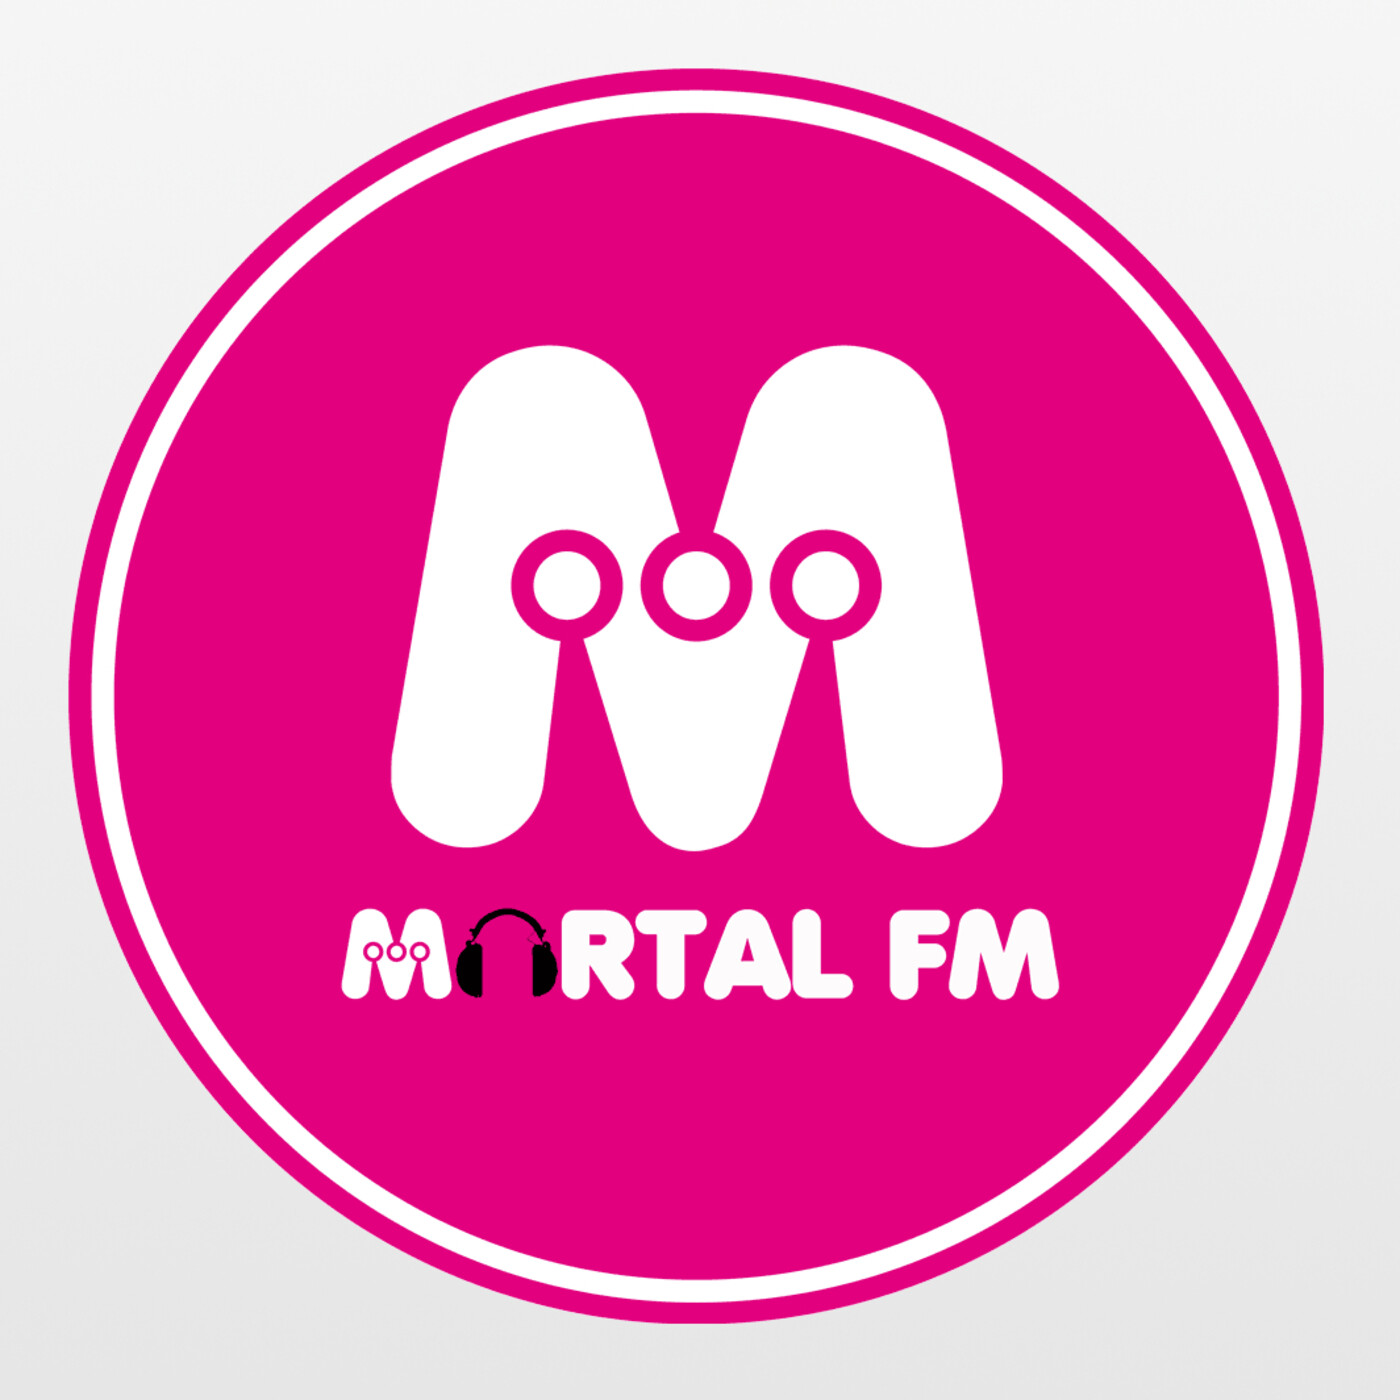 PARAISO - MORTALFM 8 de Noviembre 2020